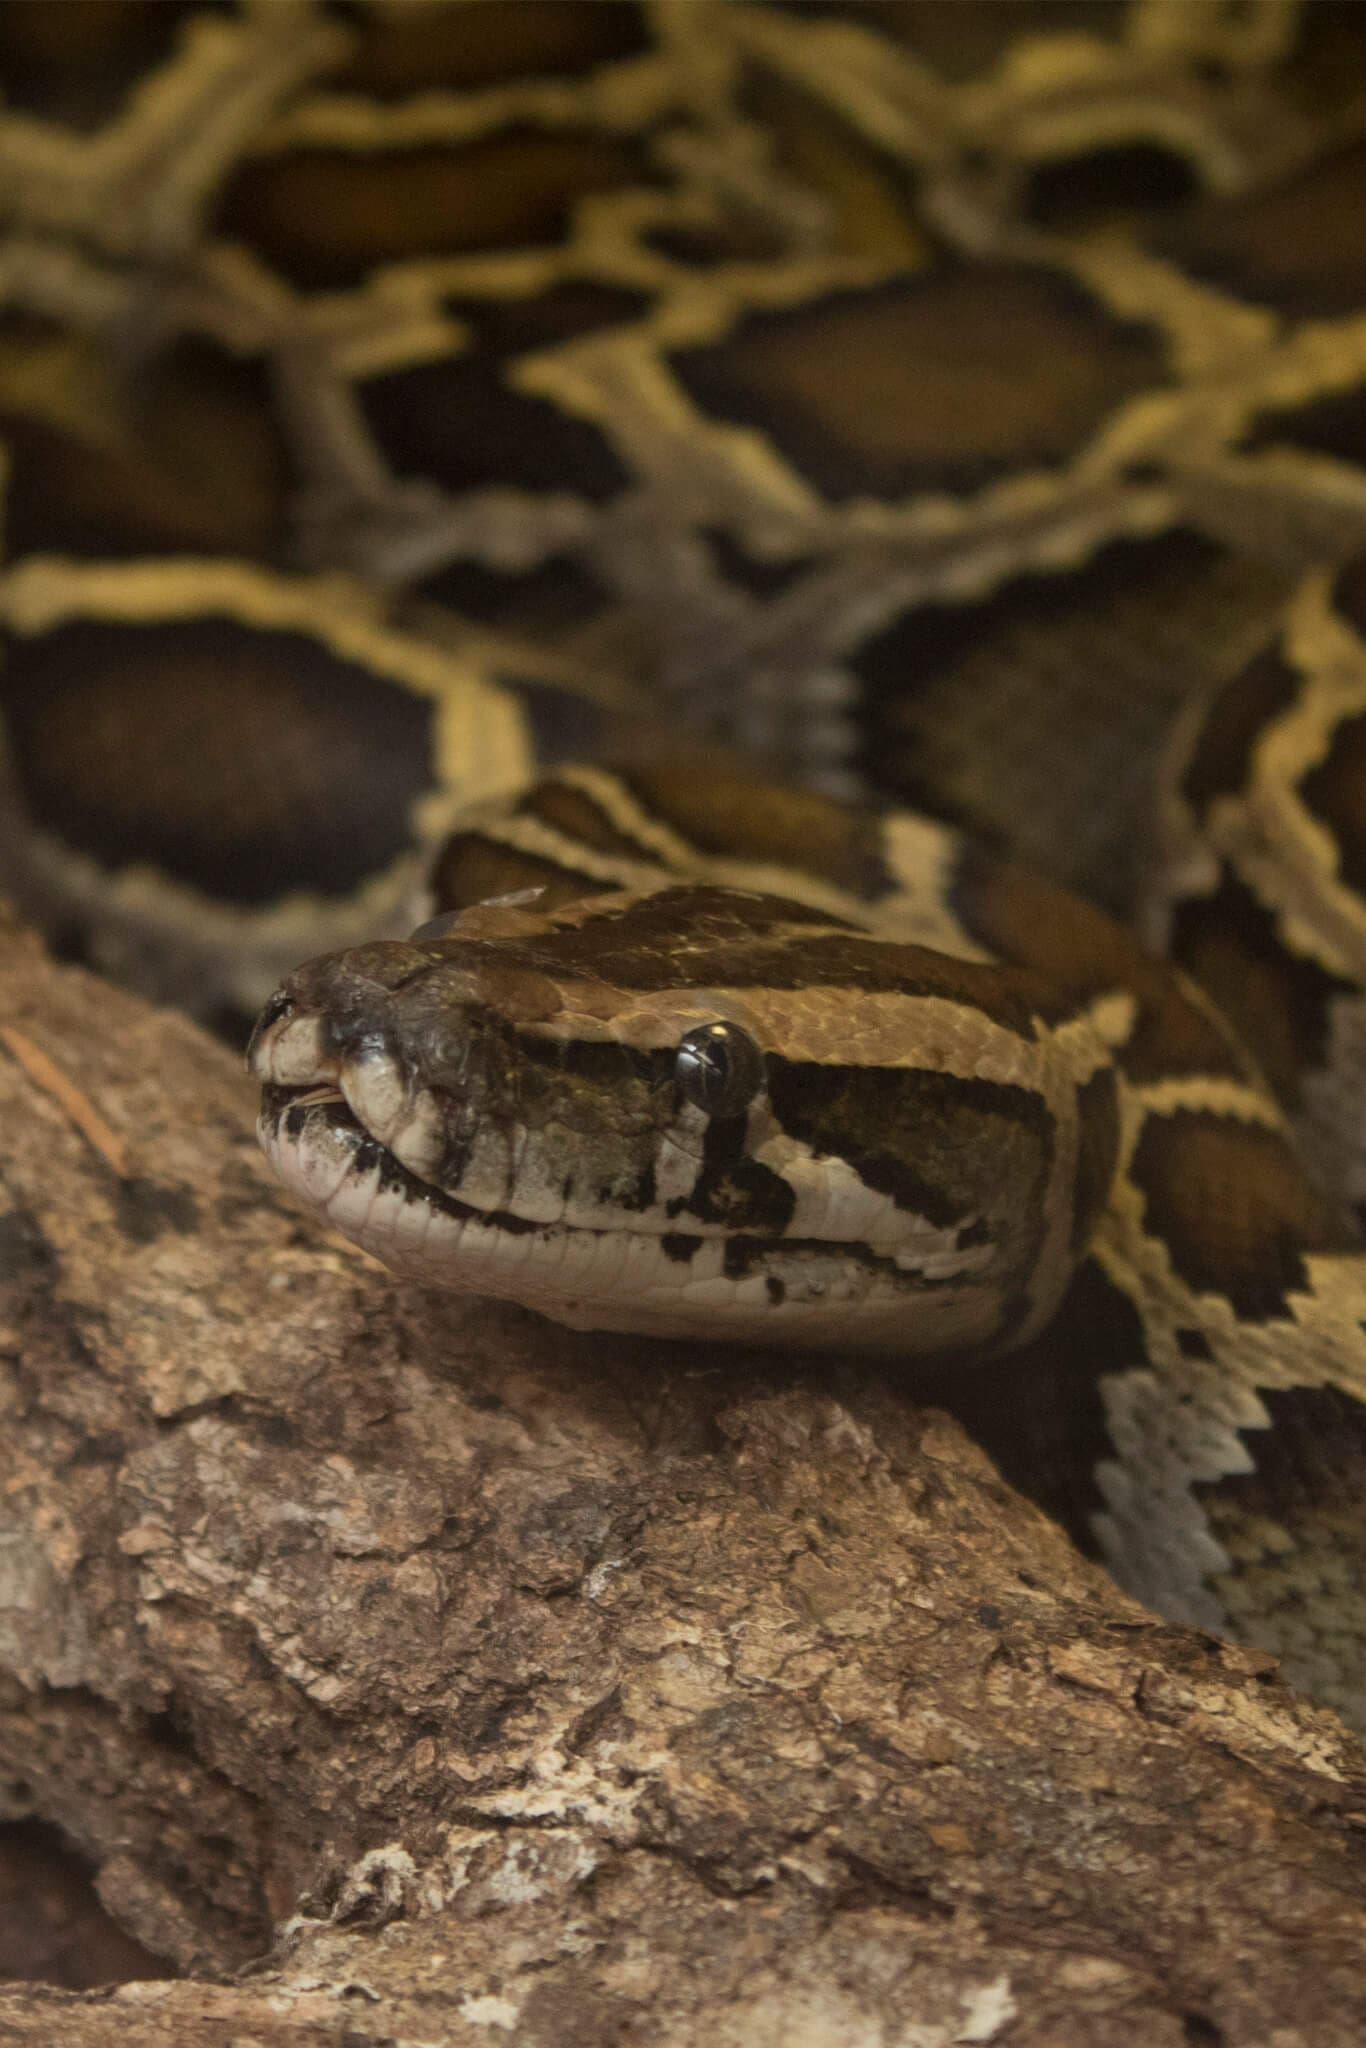 Python up close